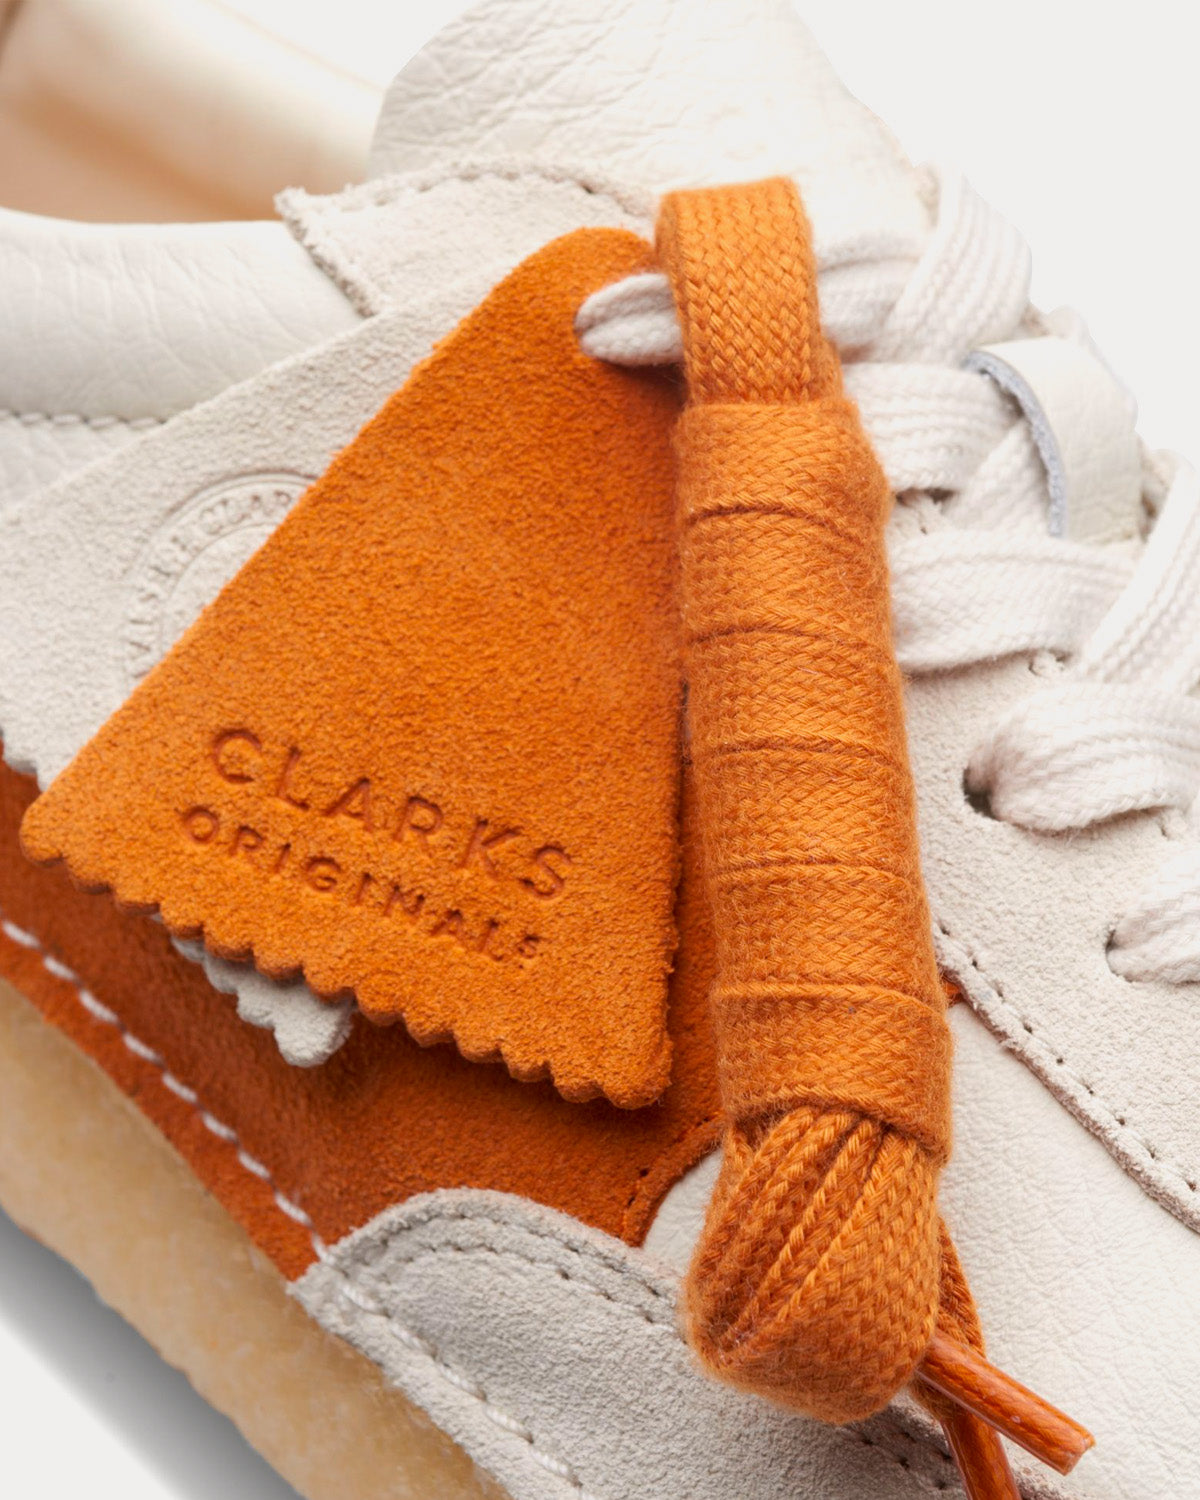 Clarks - Natalie Run White / Orange Low Top Sneakers